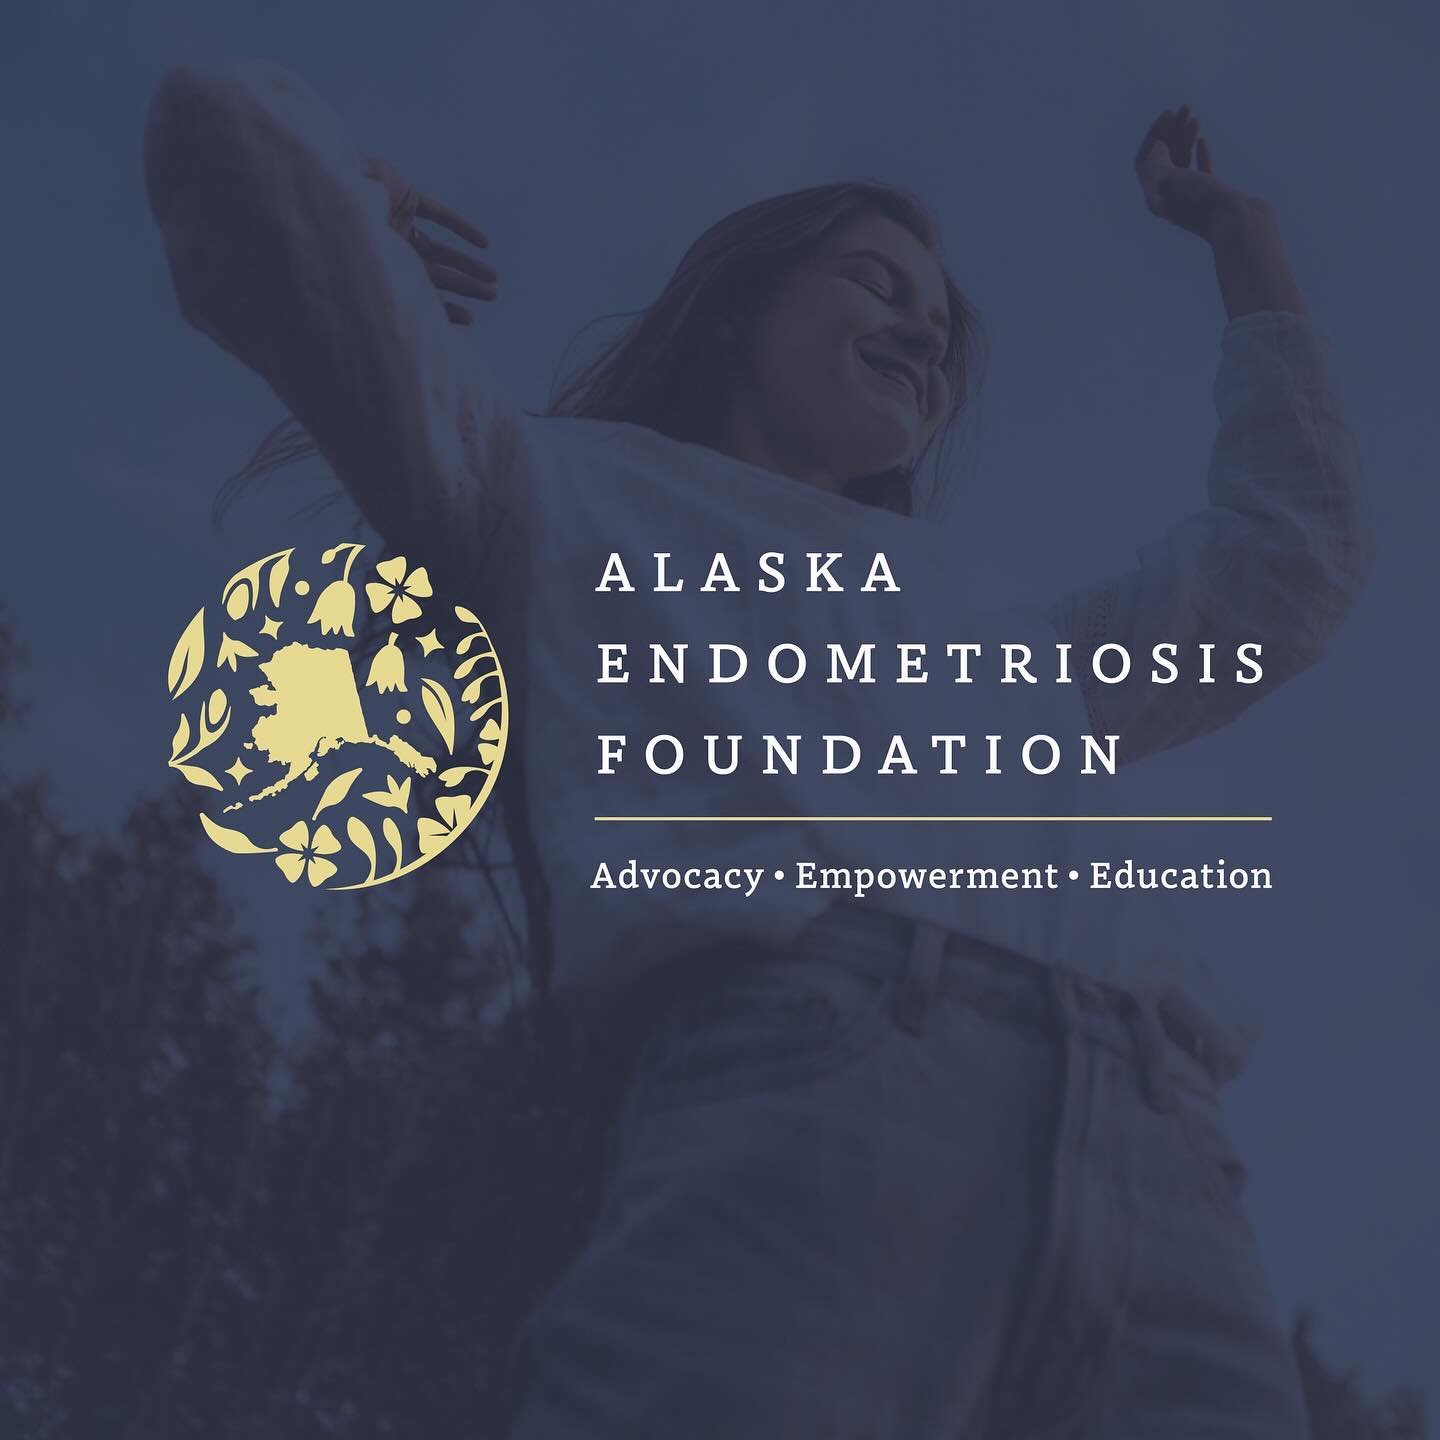 Advocacy, empowerment and education for Alaskans whose lives are affected by endometriosis. #poeticadesign #alaskalife 
.
.
.
#logo #logodesigns #logoinspirations #alaska #anchorage #alaskan